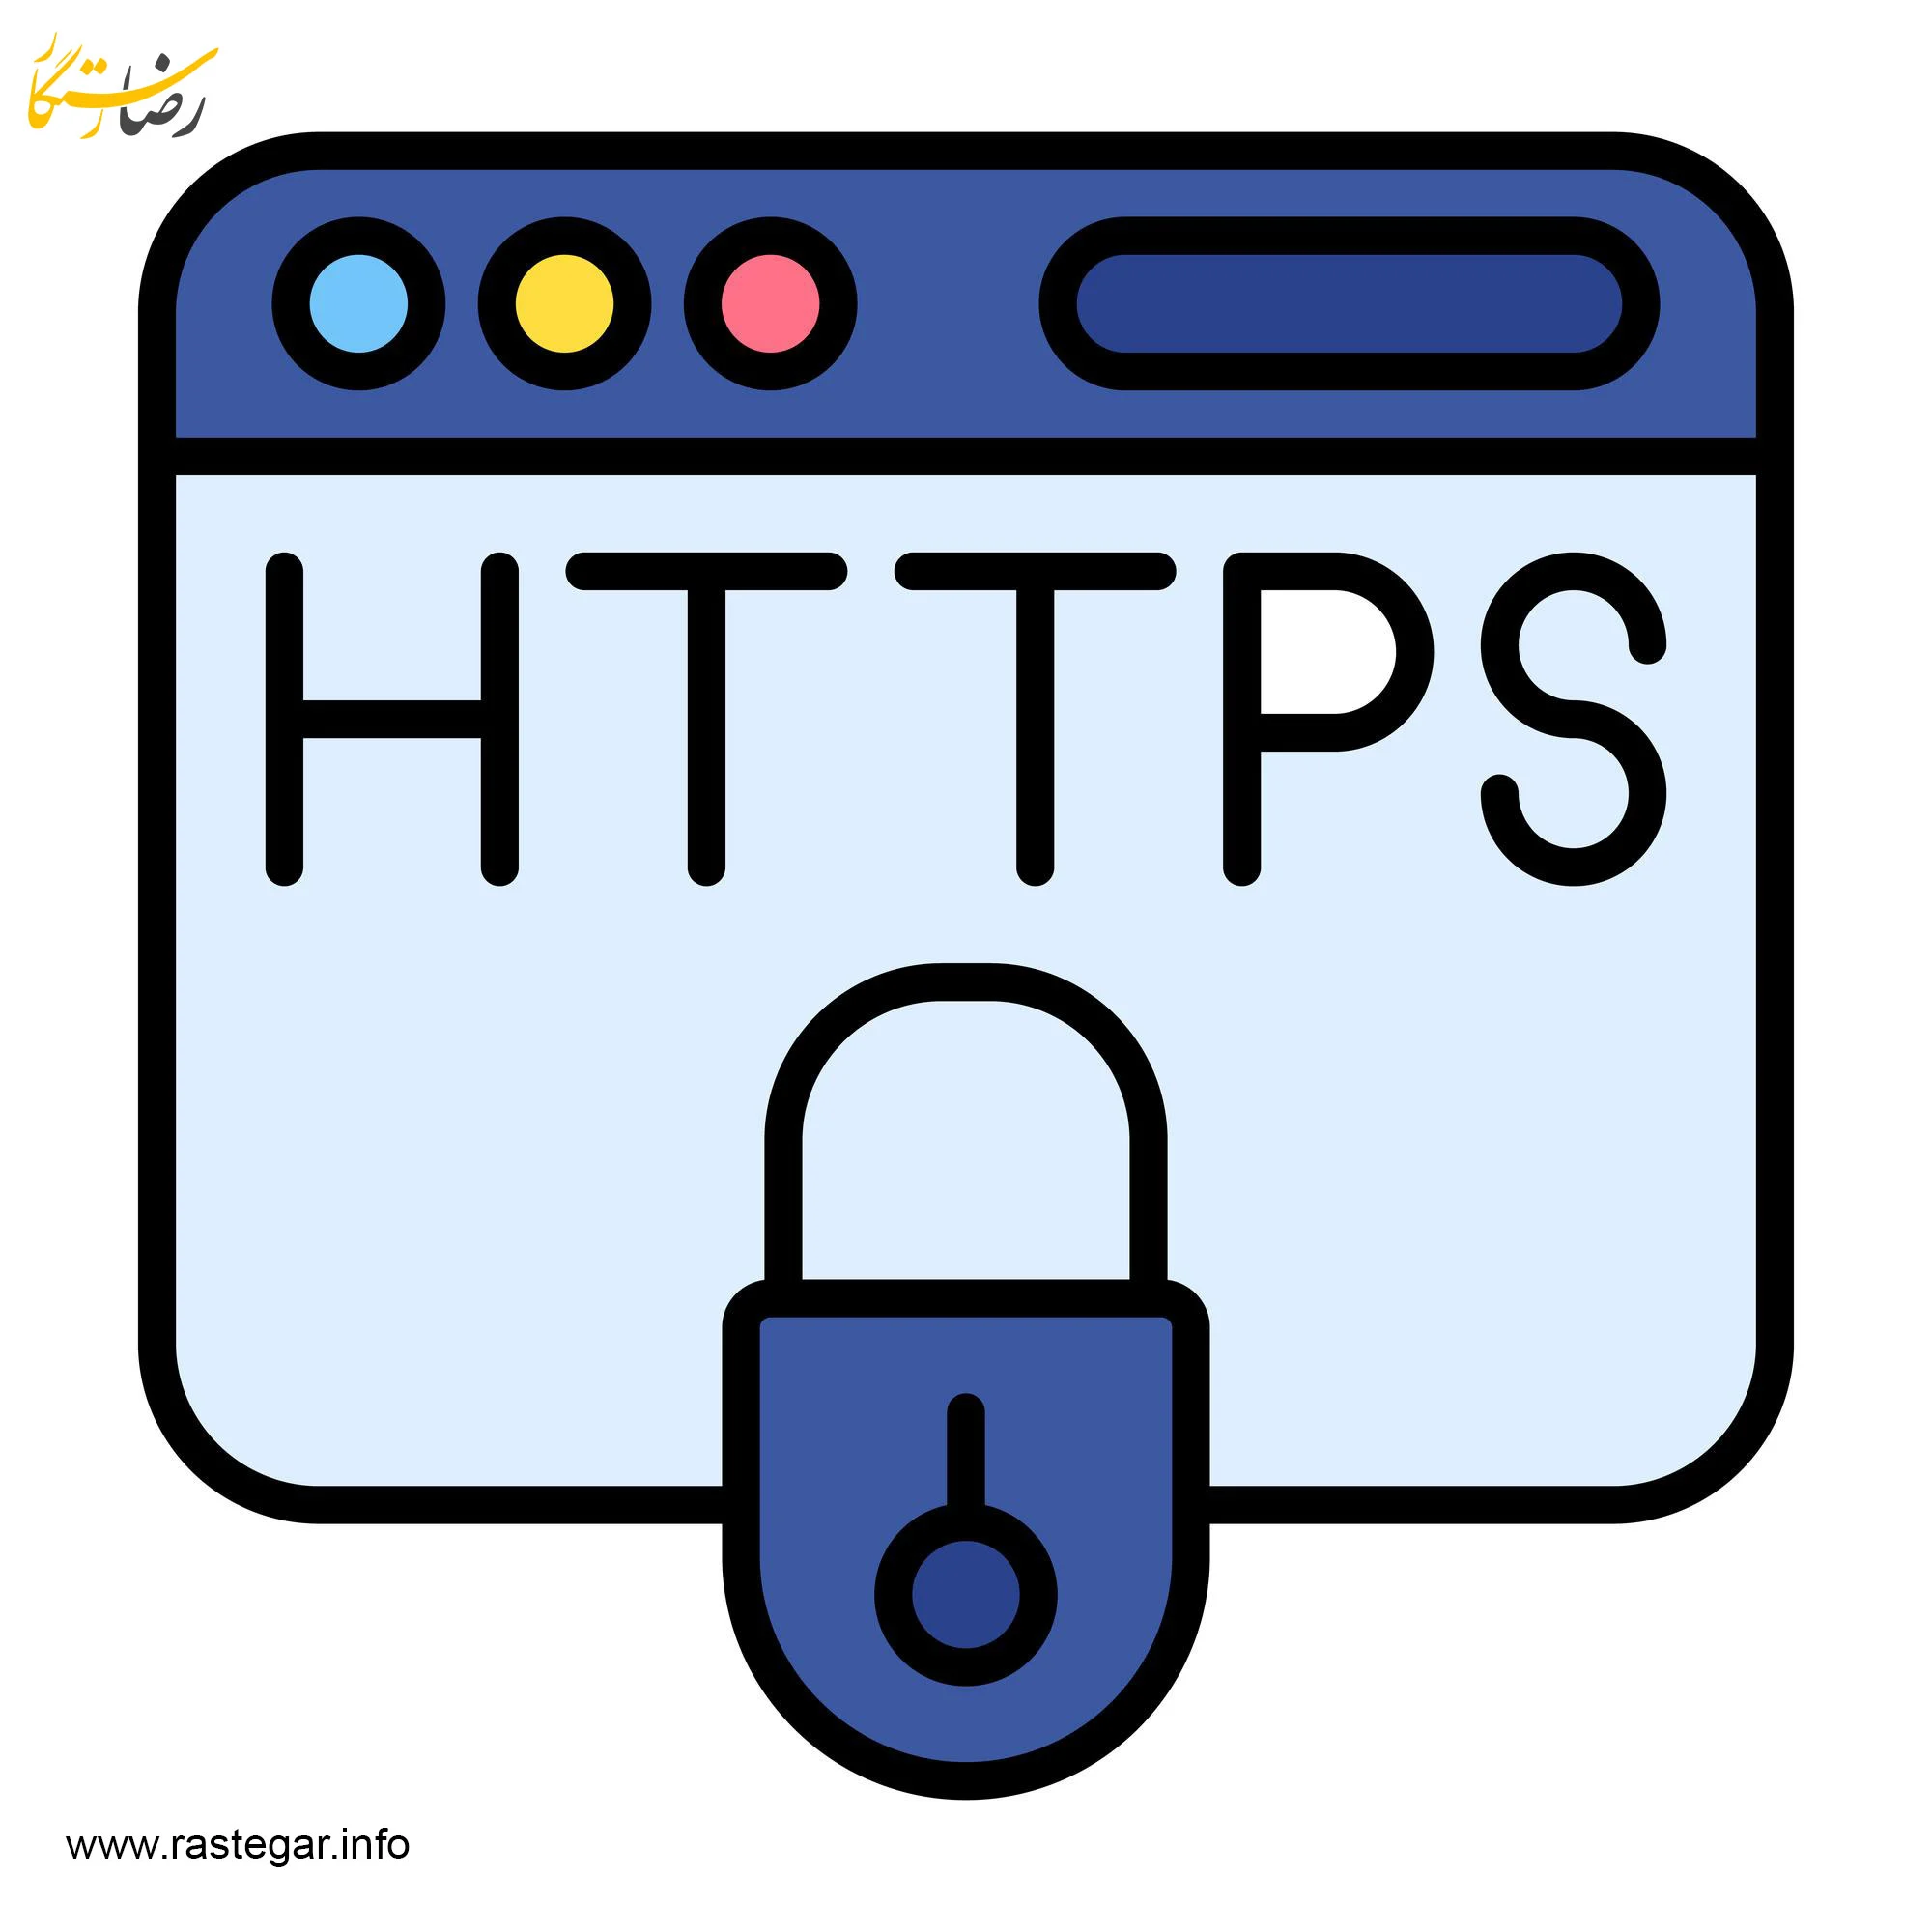 ssl certificate in website security 3